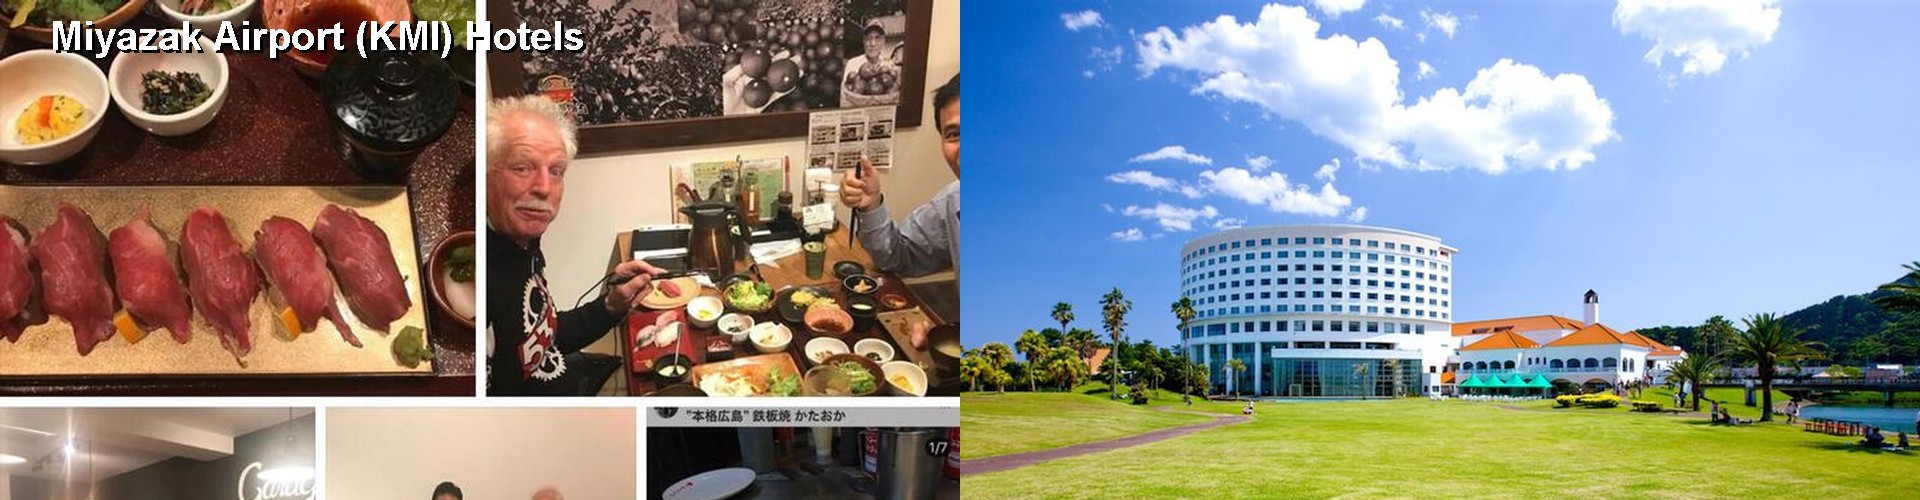 3 Best Hotels near Miyazak Airport (KMI)